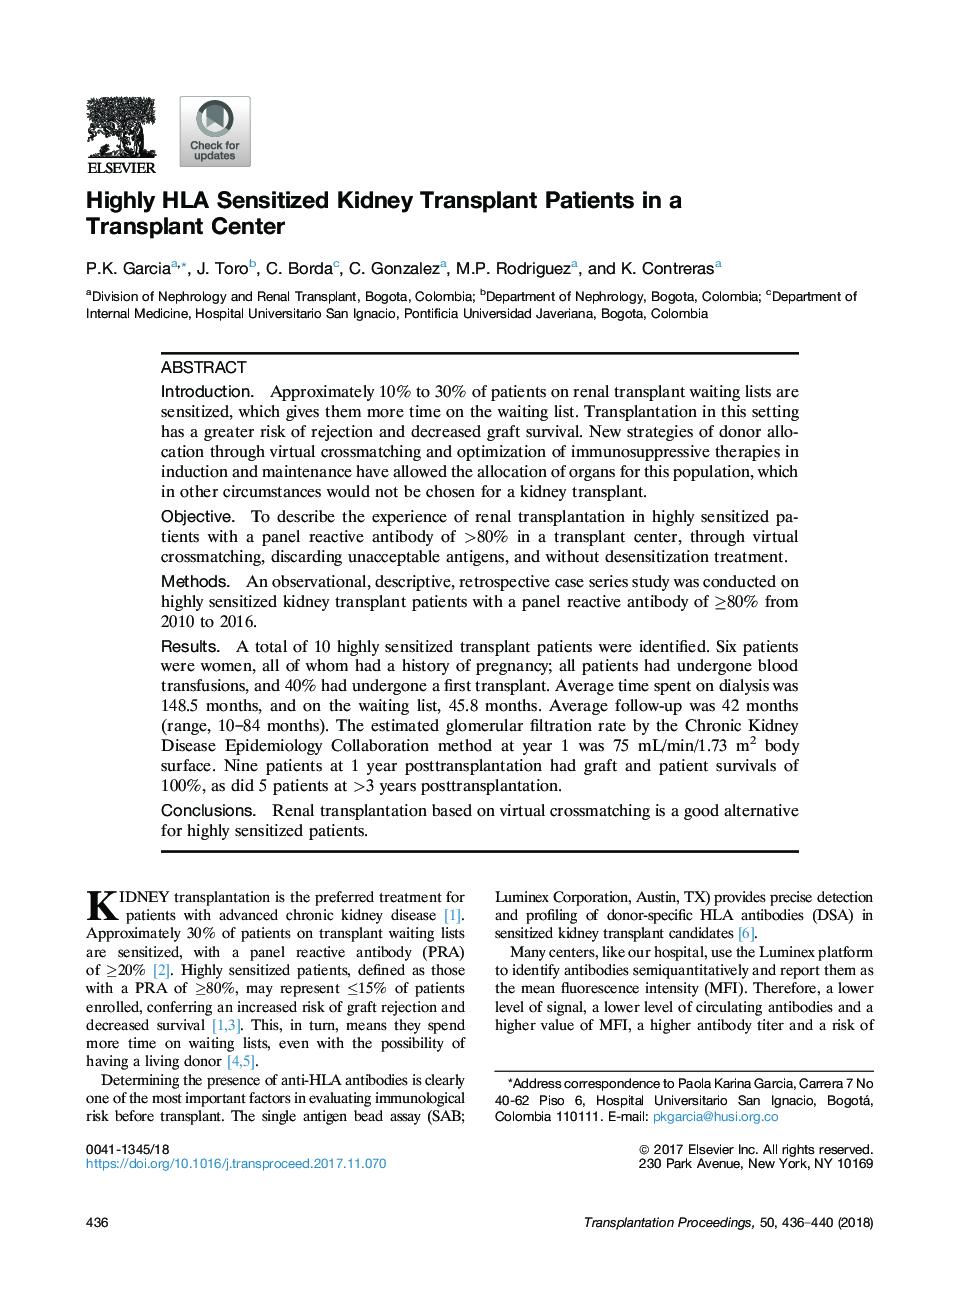 Highly HLA Sensitized Kidney Transplant Patients in a Transplant Center